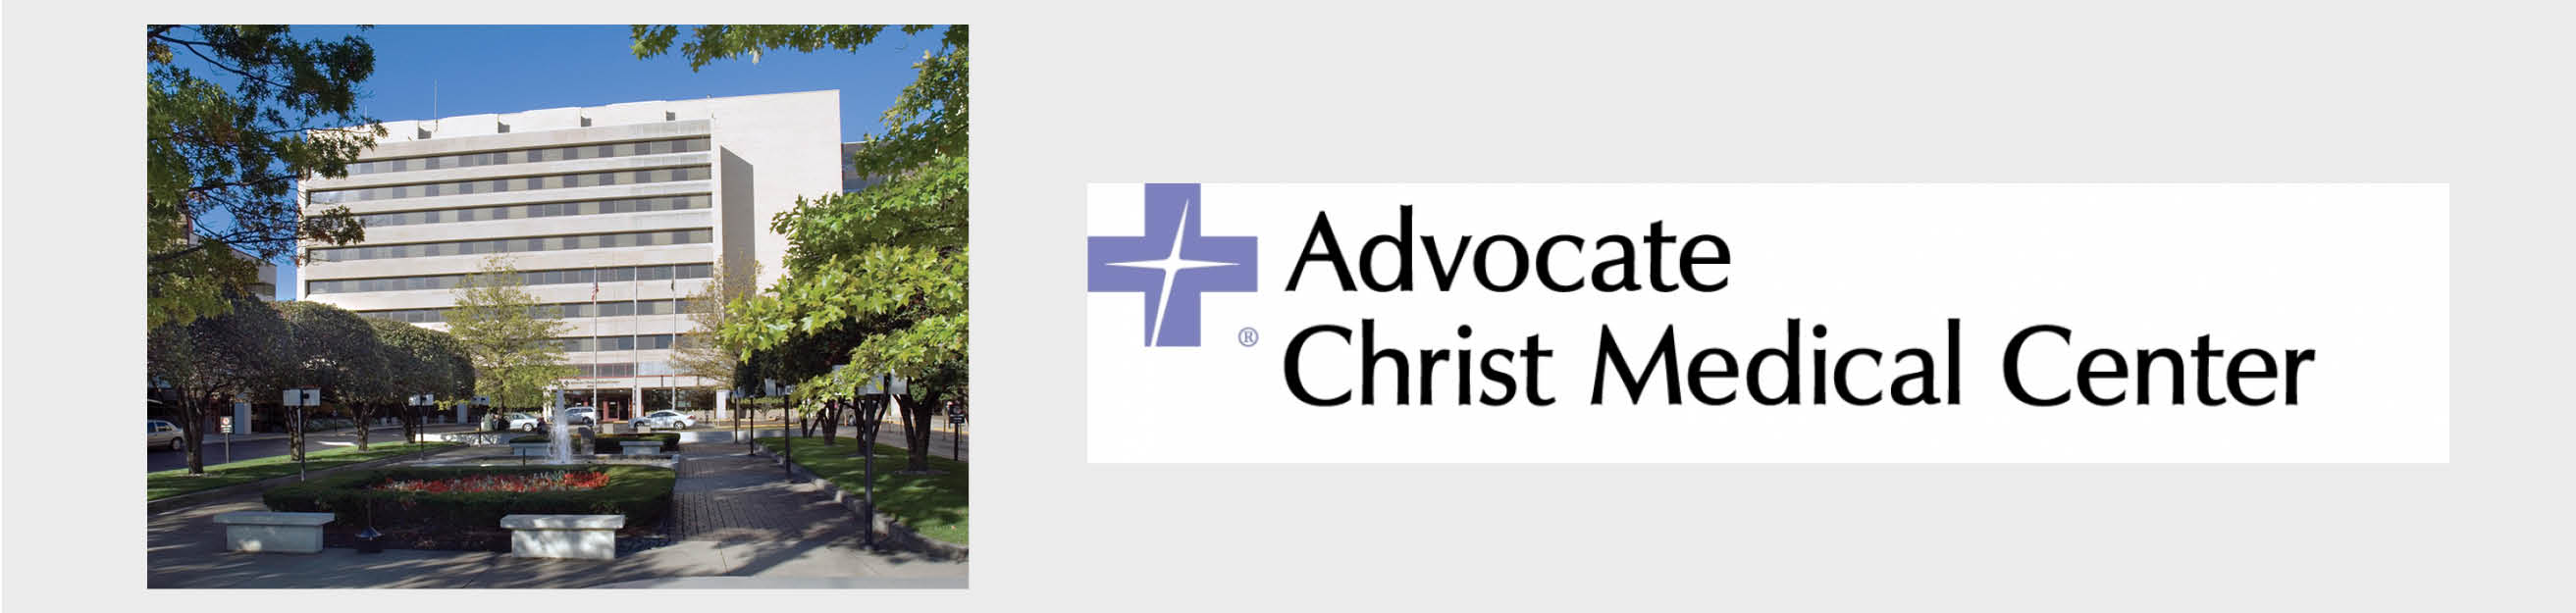 advocate-christ-medical-center